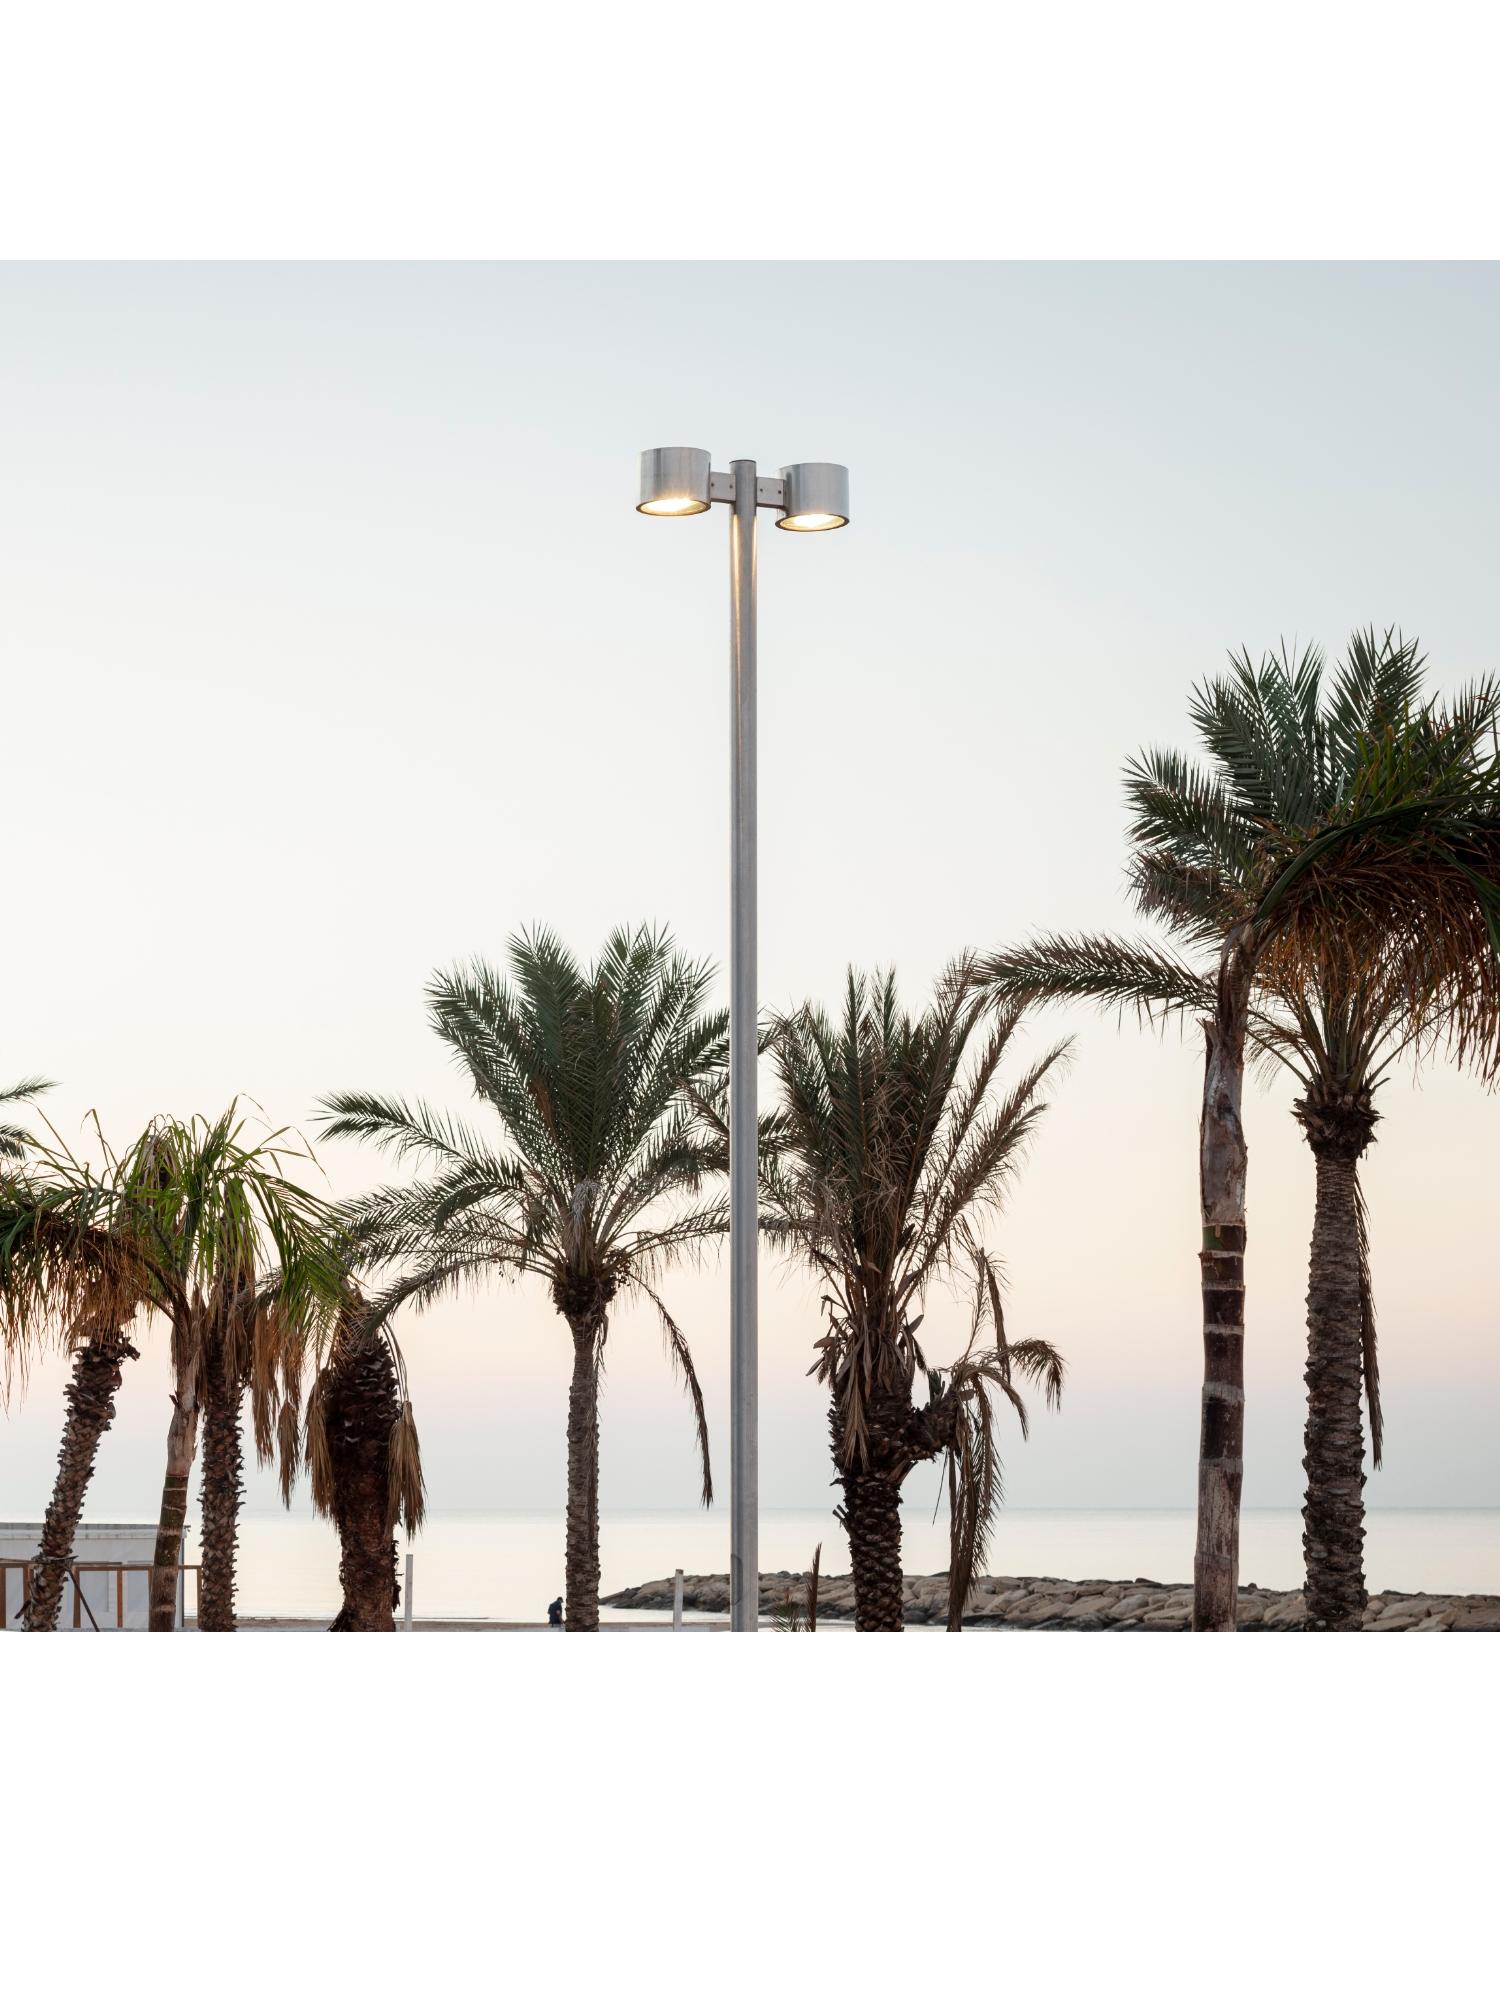 Street poles for efficient street lighting:
Marina di Ragusa waterfront